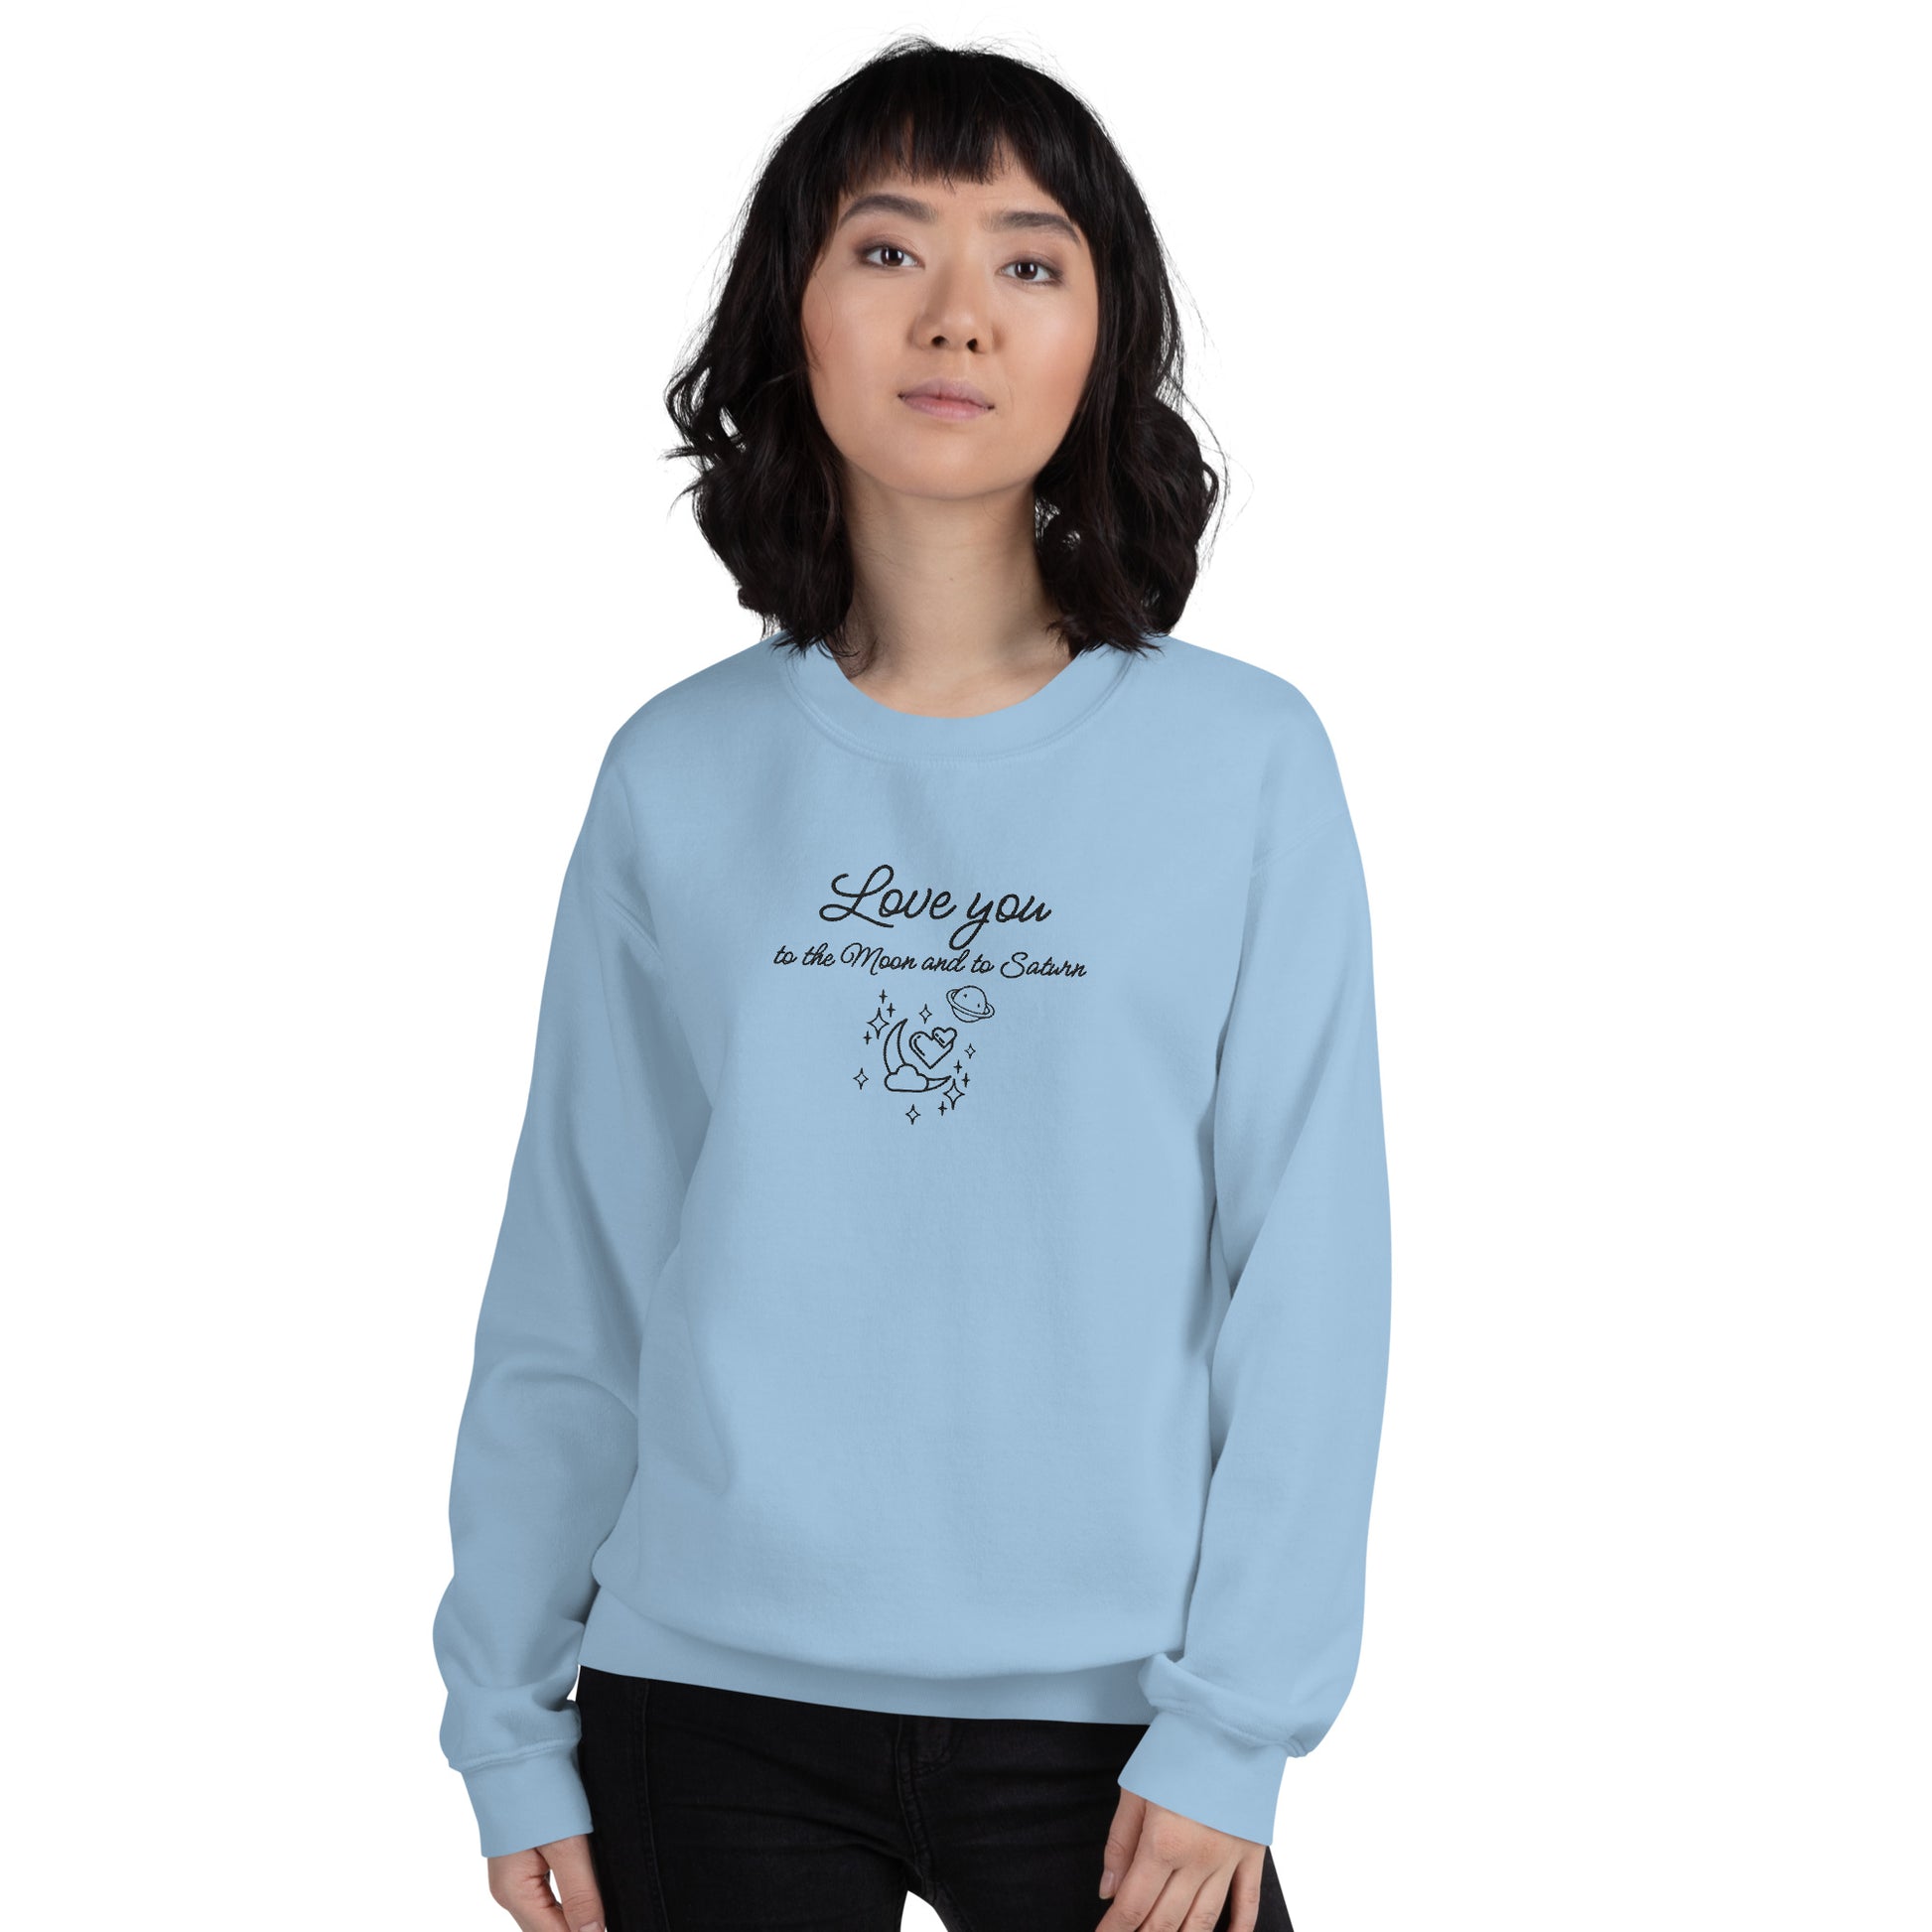 Moon and Saturn Embroidered Sweatshirt Light Blue